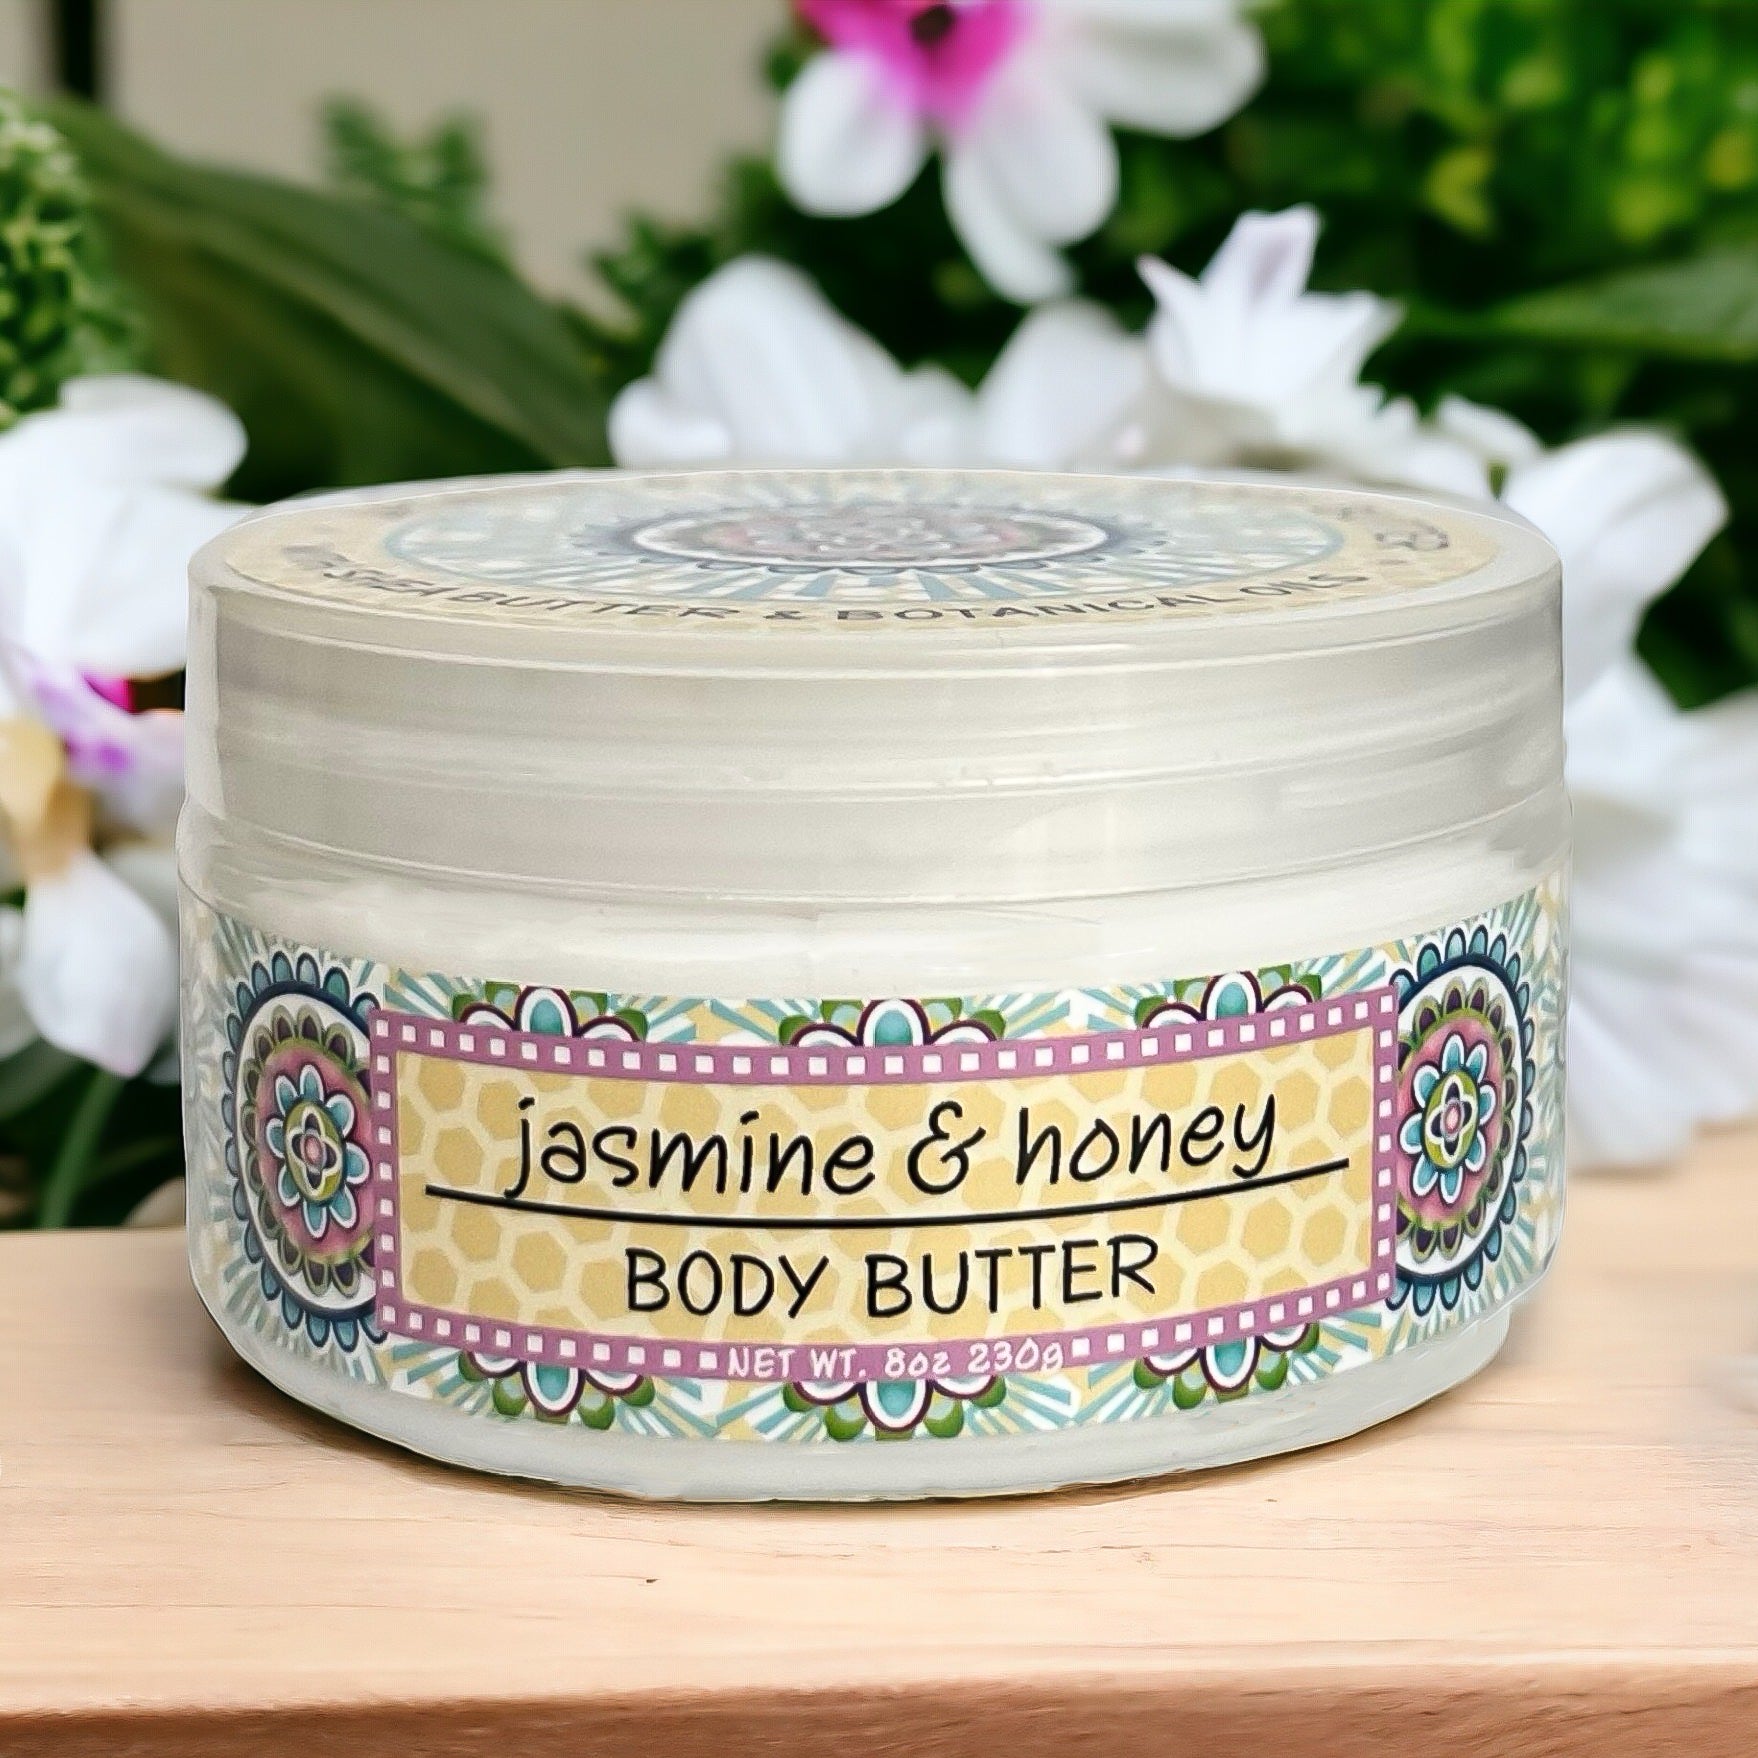 JASMINE & HONEY Body Butter - Greenwich Bay Trading Company